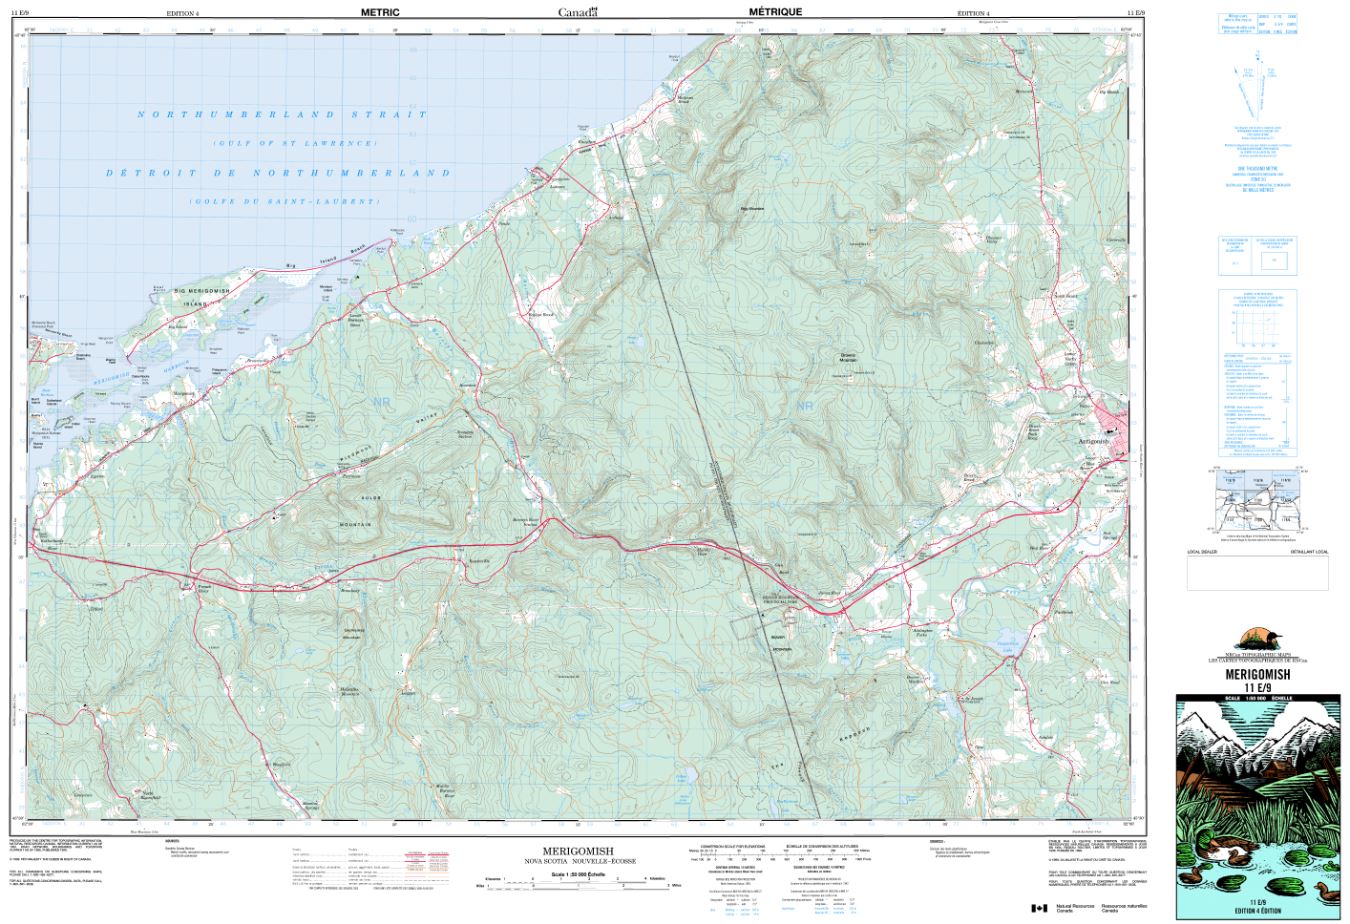 11E/09 Merigomish Topographic Map Nova Scotia